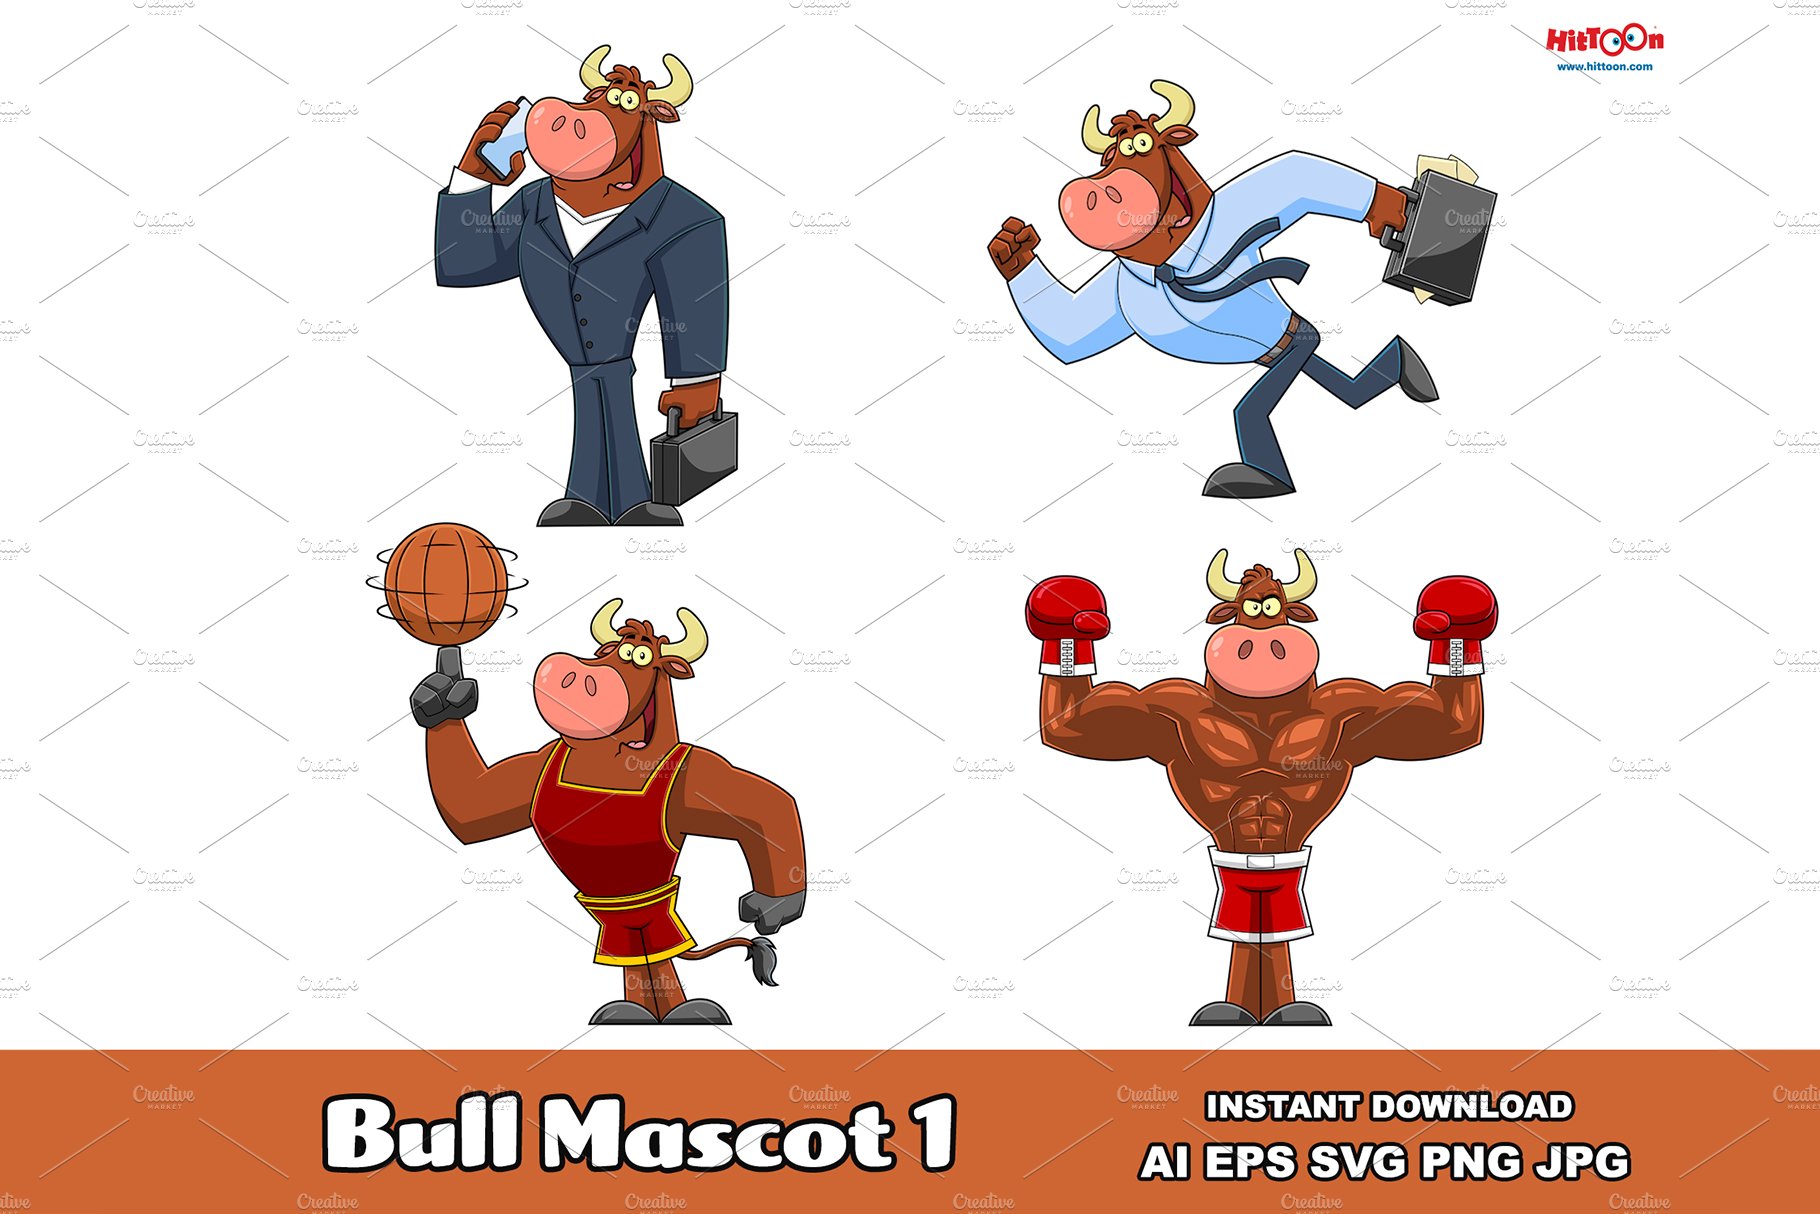 Bull Cartoon Mascot Character 1 cover image.